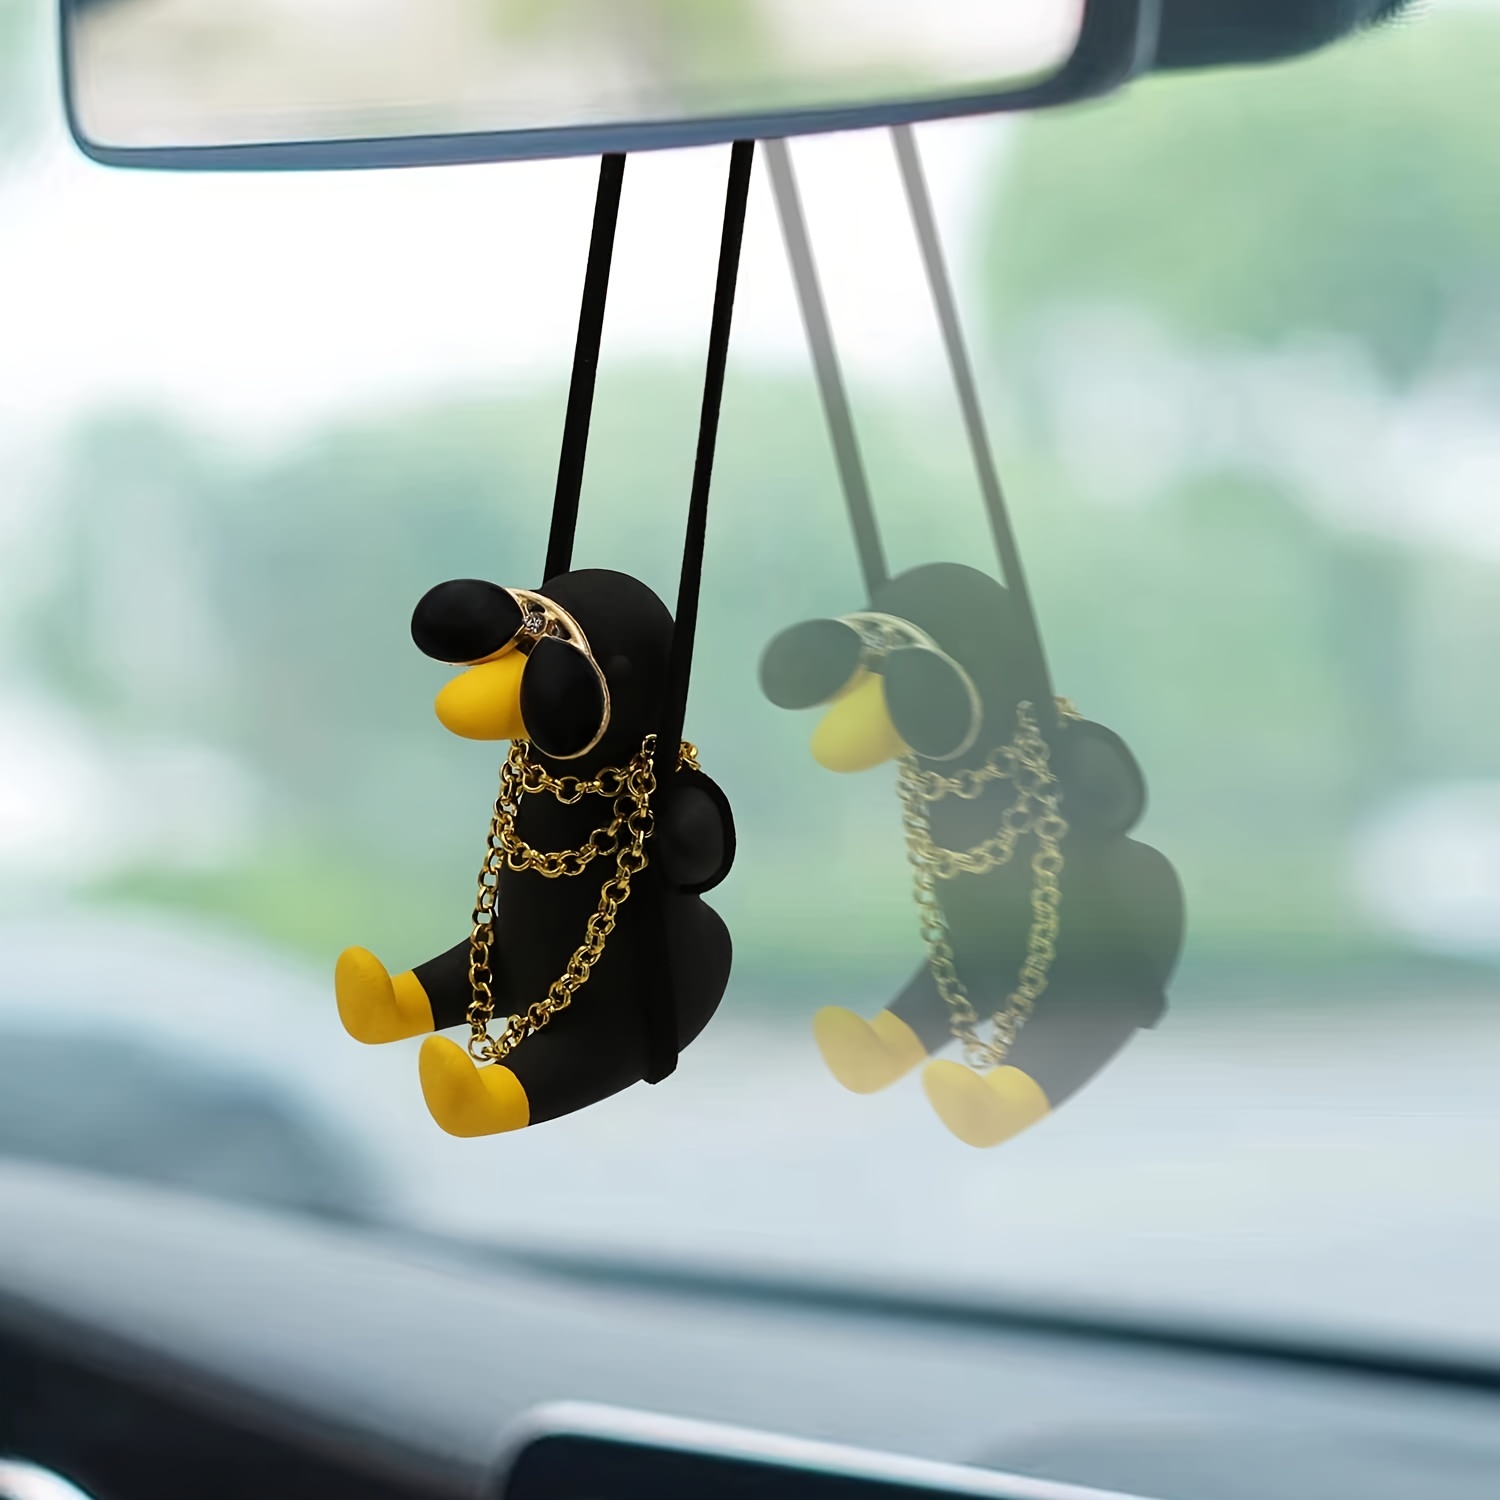  Swinging Duck Car Hanging Ornament,Car Mirror Hanging